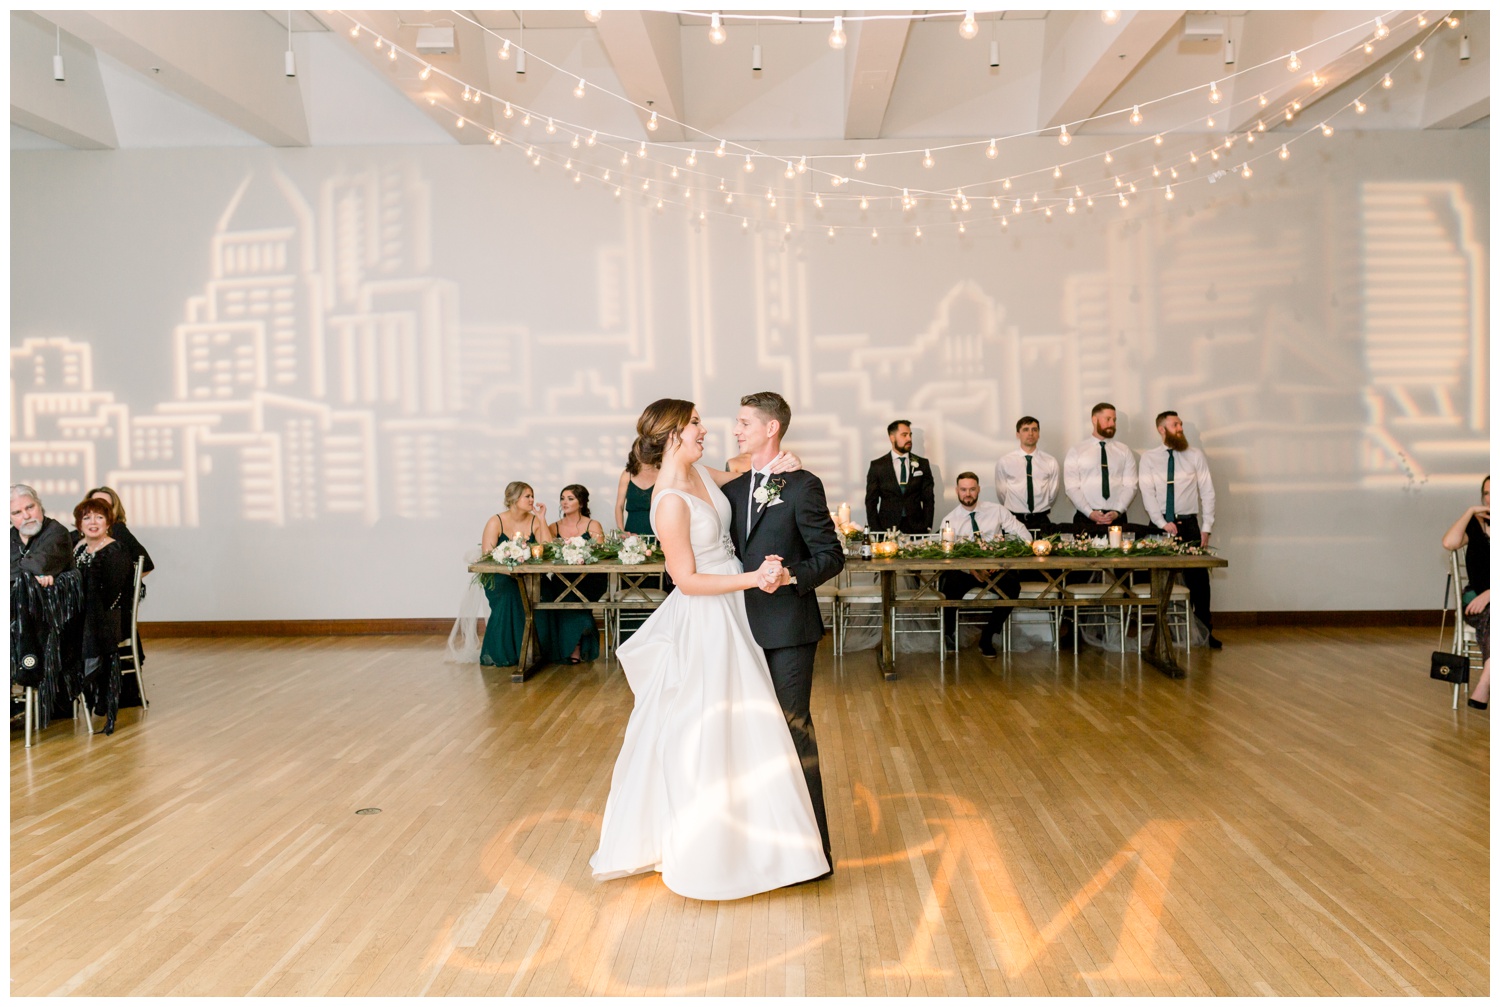 First Dance - The Center Cincinnati Wedding Reception